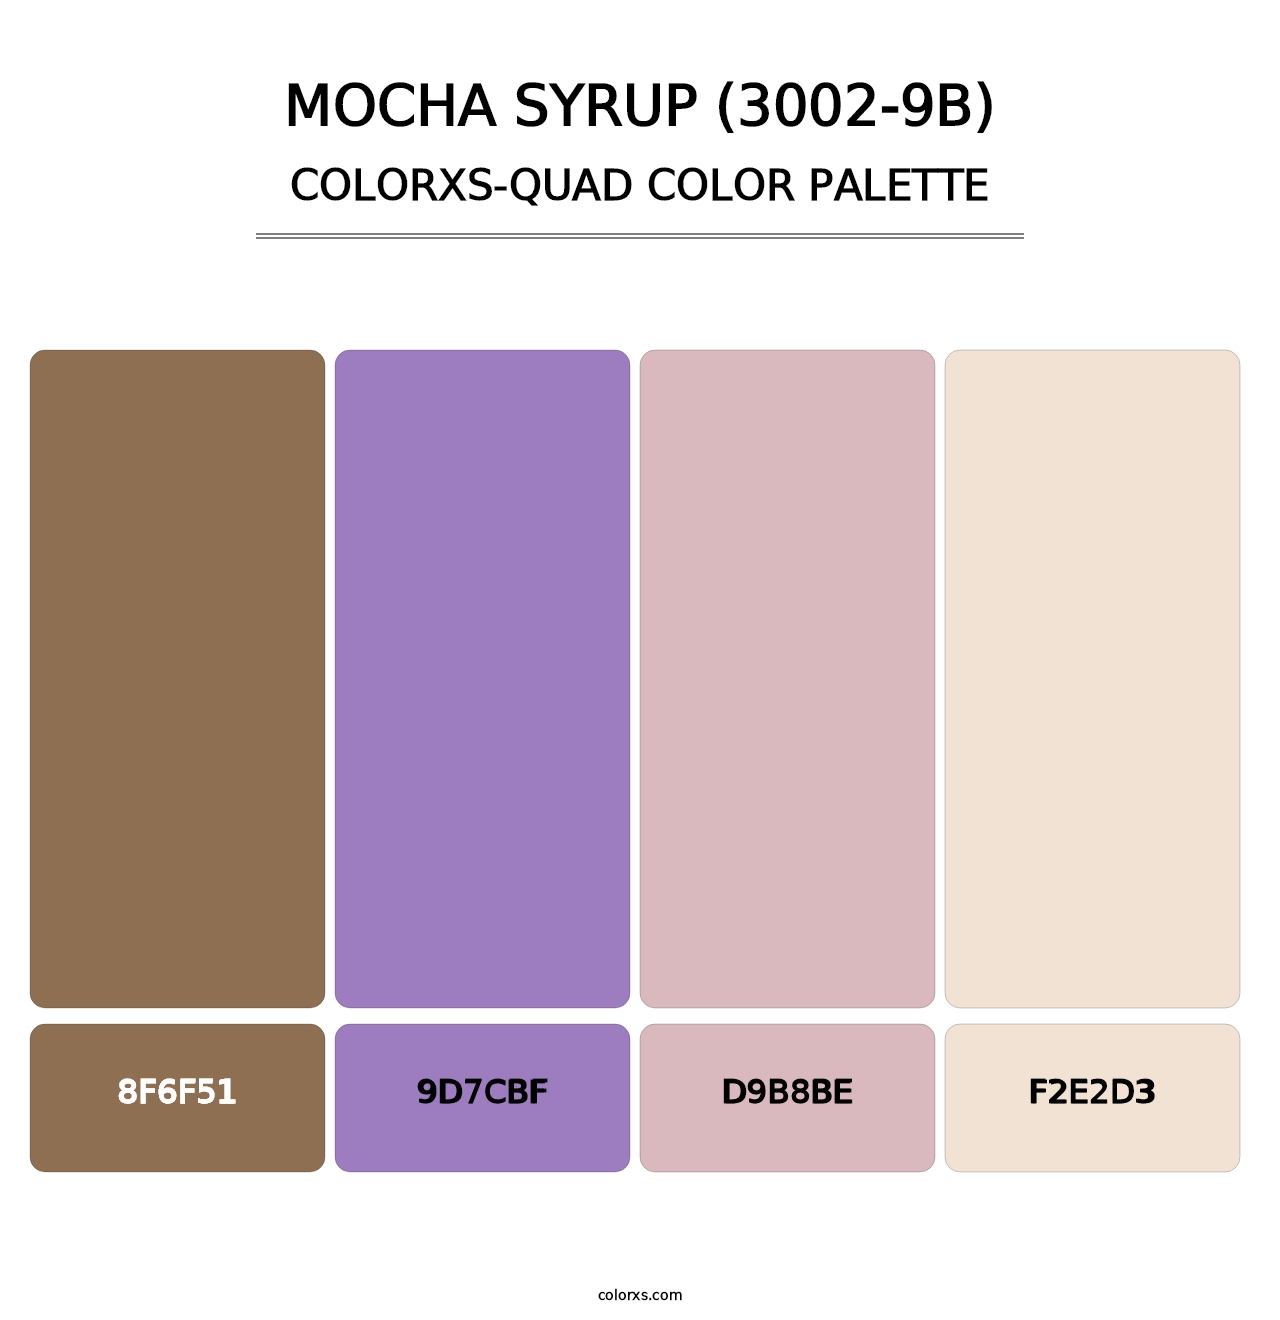 Mocha Syrup (3002-9B) - Colorxs Quad Palette